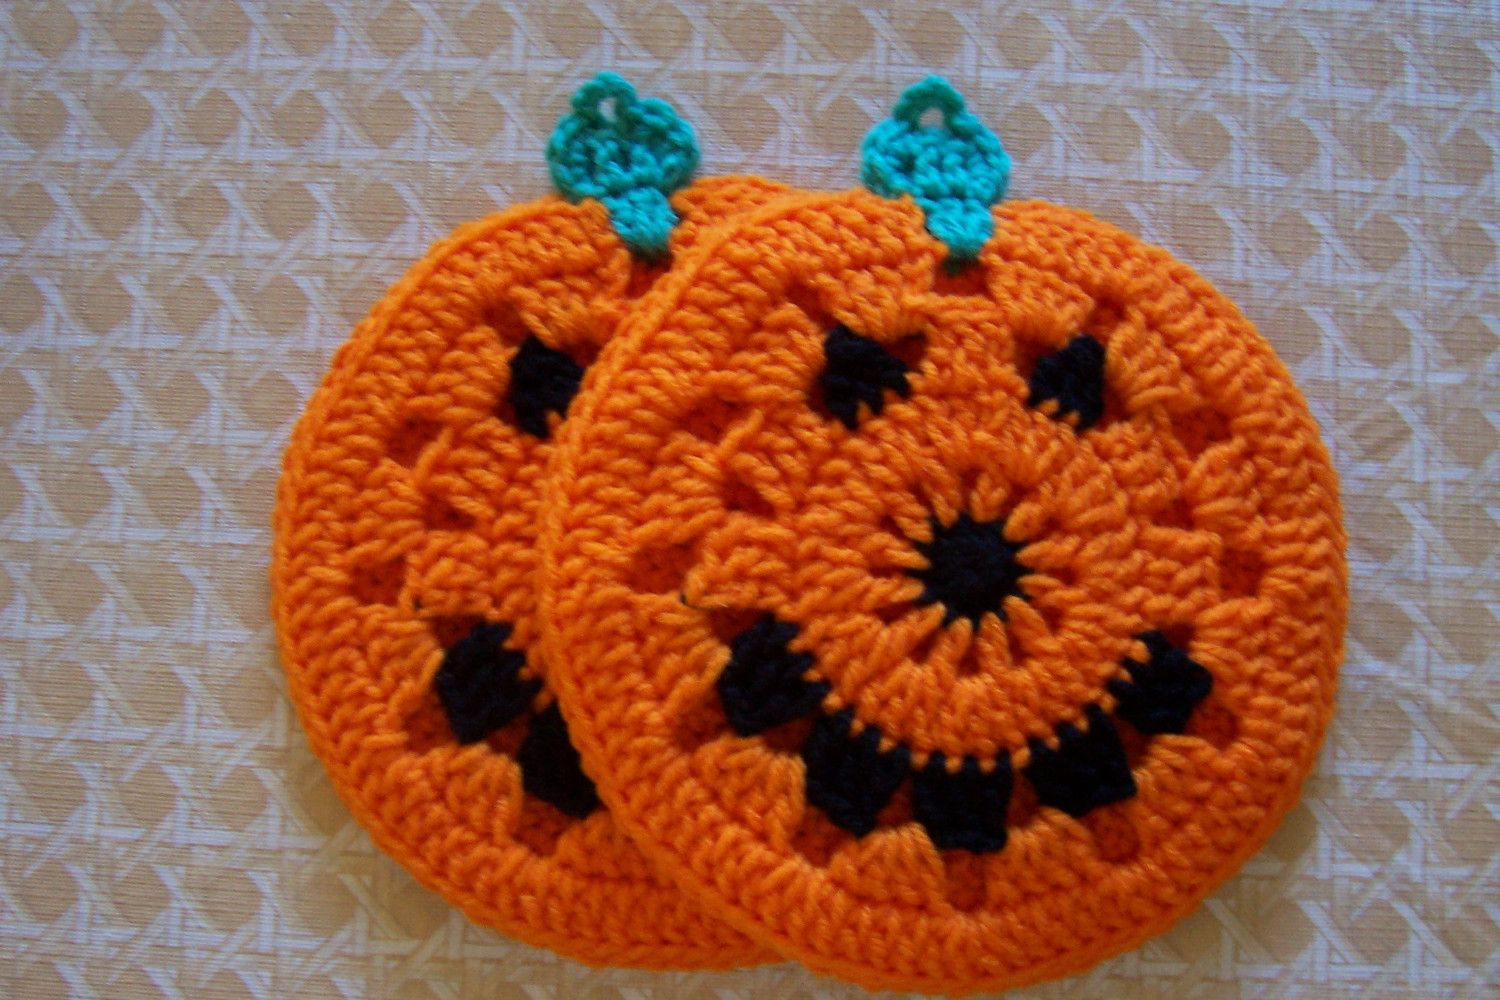 Free Crochet Potholder Patterns New Free Crochet Pot Holder Patterns Pot Holder Crochet Potholder